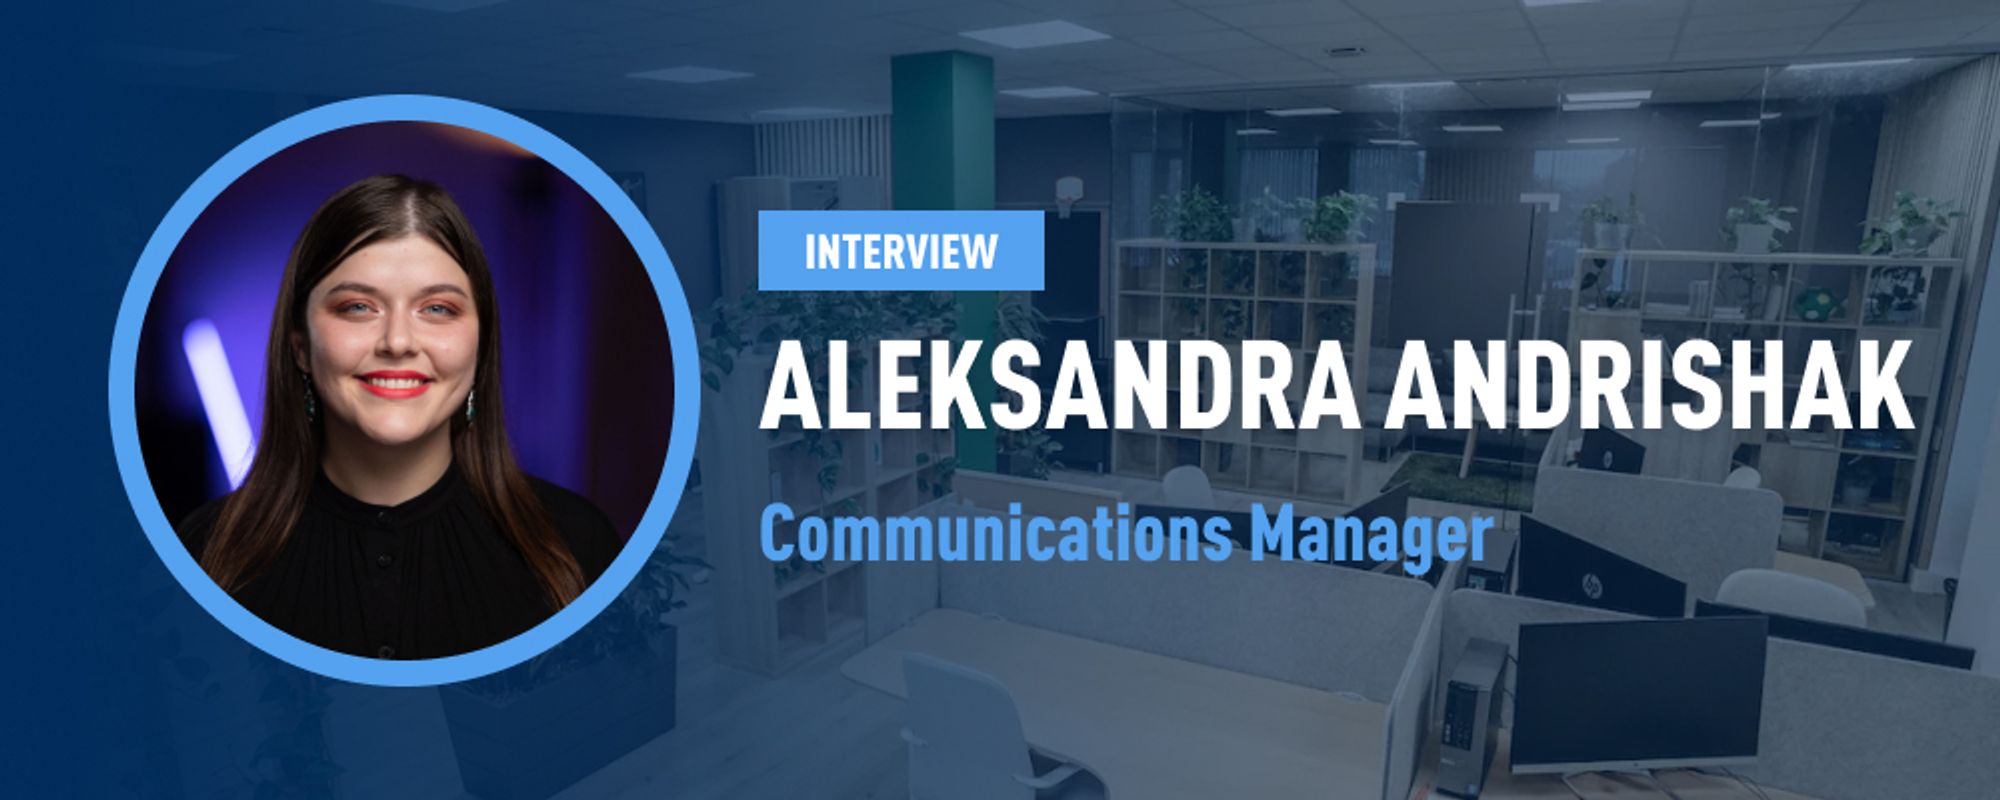 Aleksandra Andrishak interview